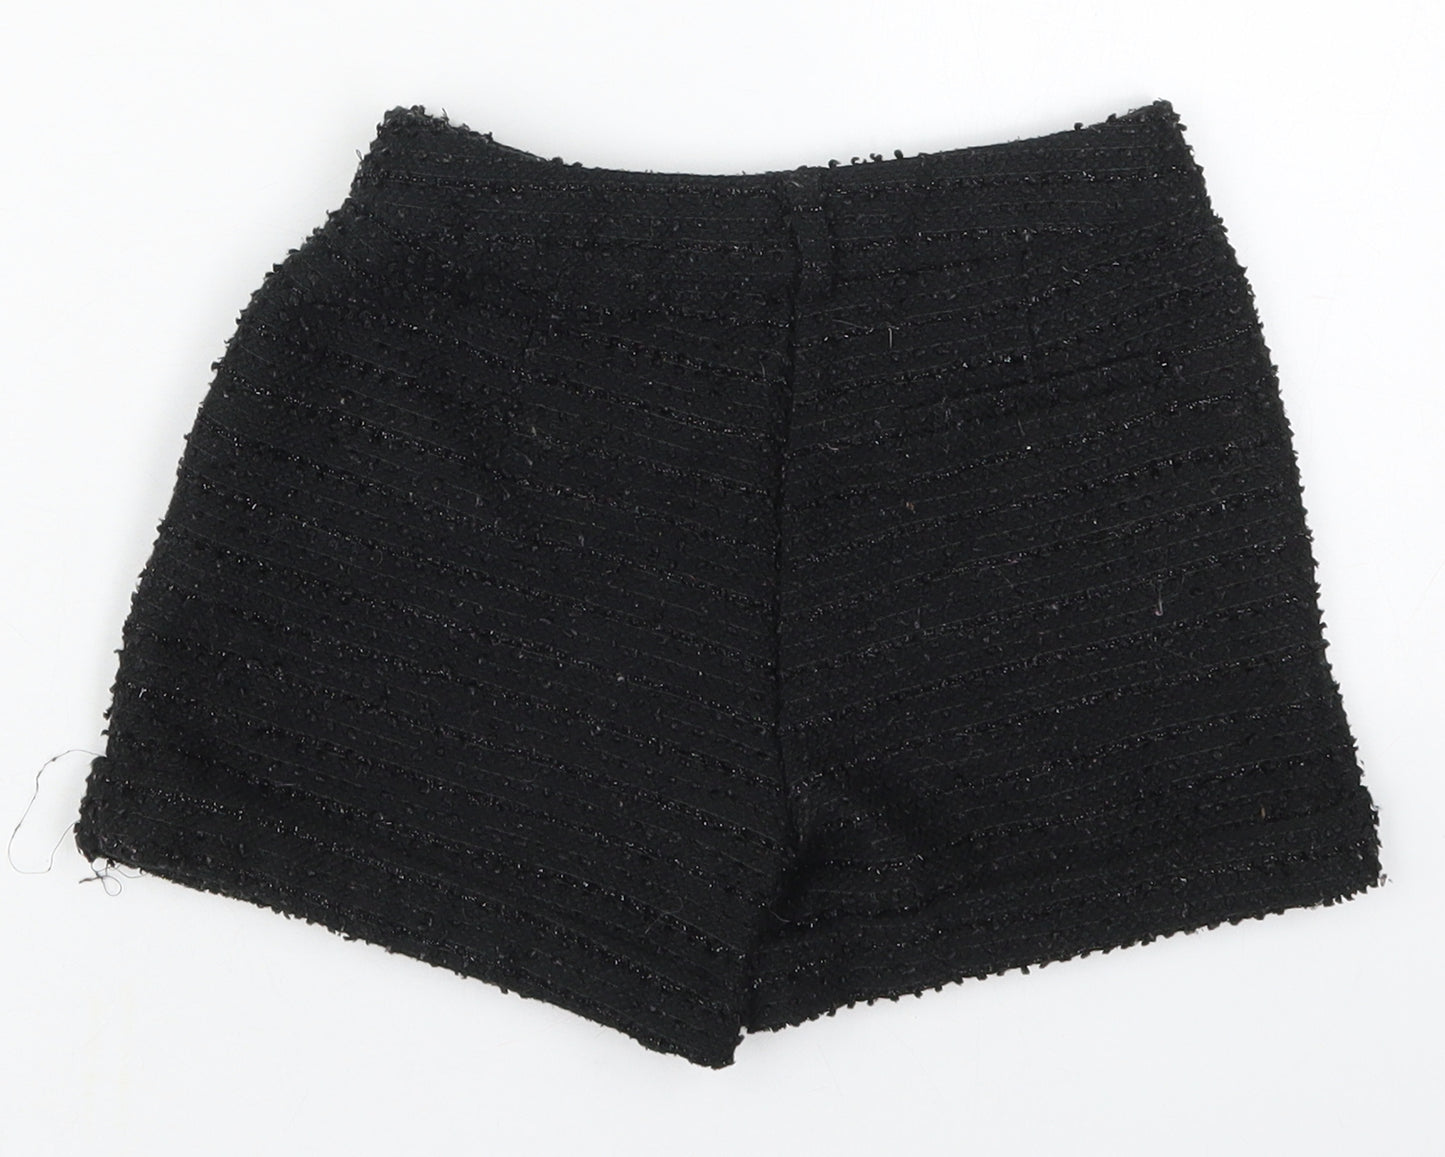 George Girls Black  Polyester Mom Shorts Size 6-7 Years  Regular Hook & Eye